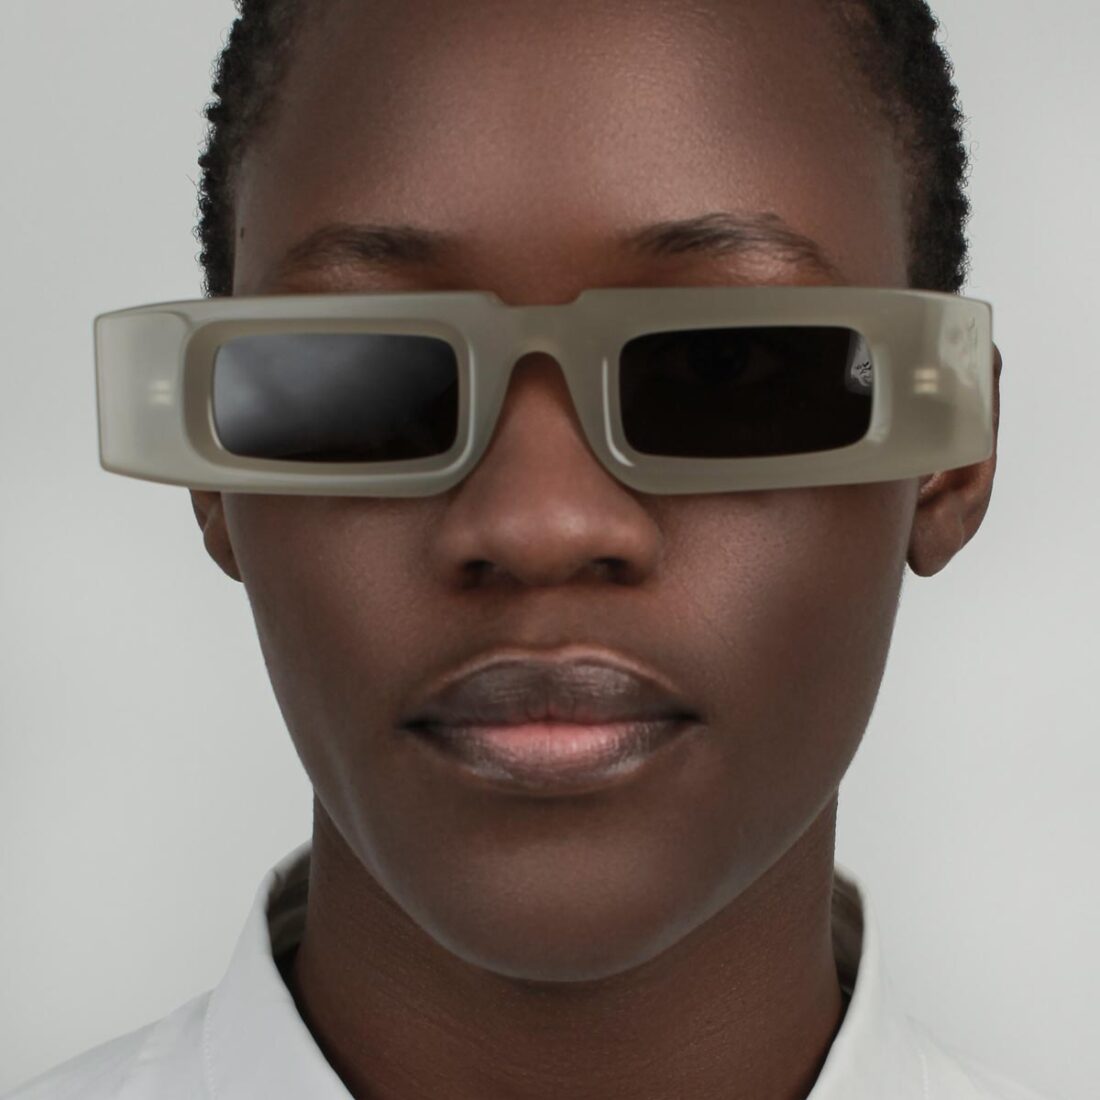 Gafas de sol Kuboraum X5 | Comprar gafas online